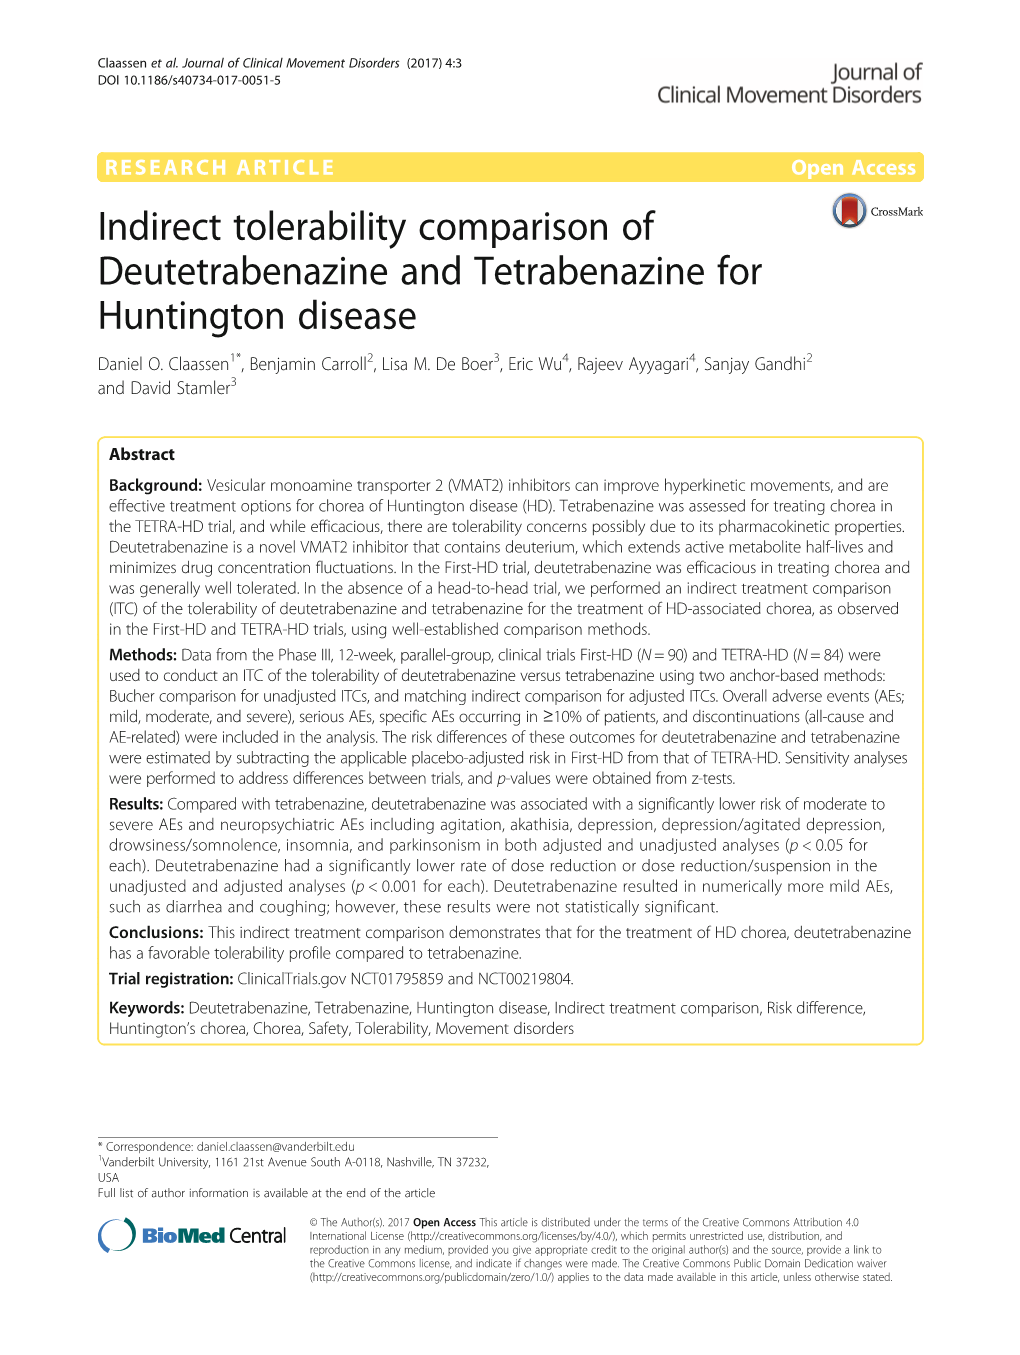 Indirect Tolerability Comparison of Deutetrabenazine and Tetrabenazine for Huntington Disease Daniel O